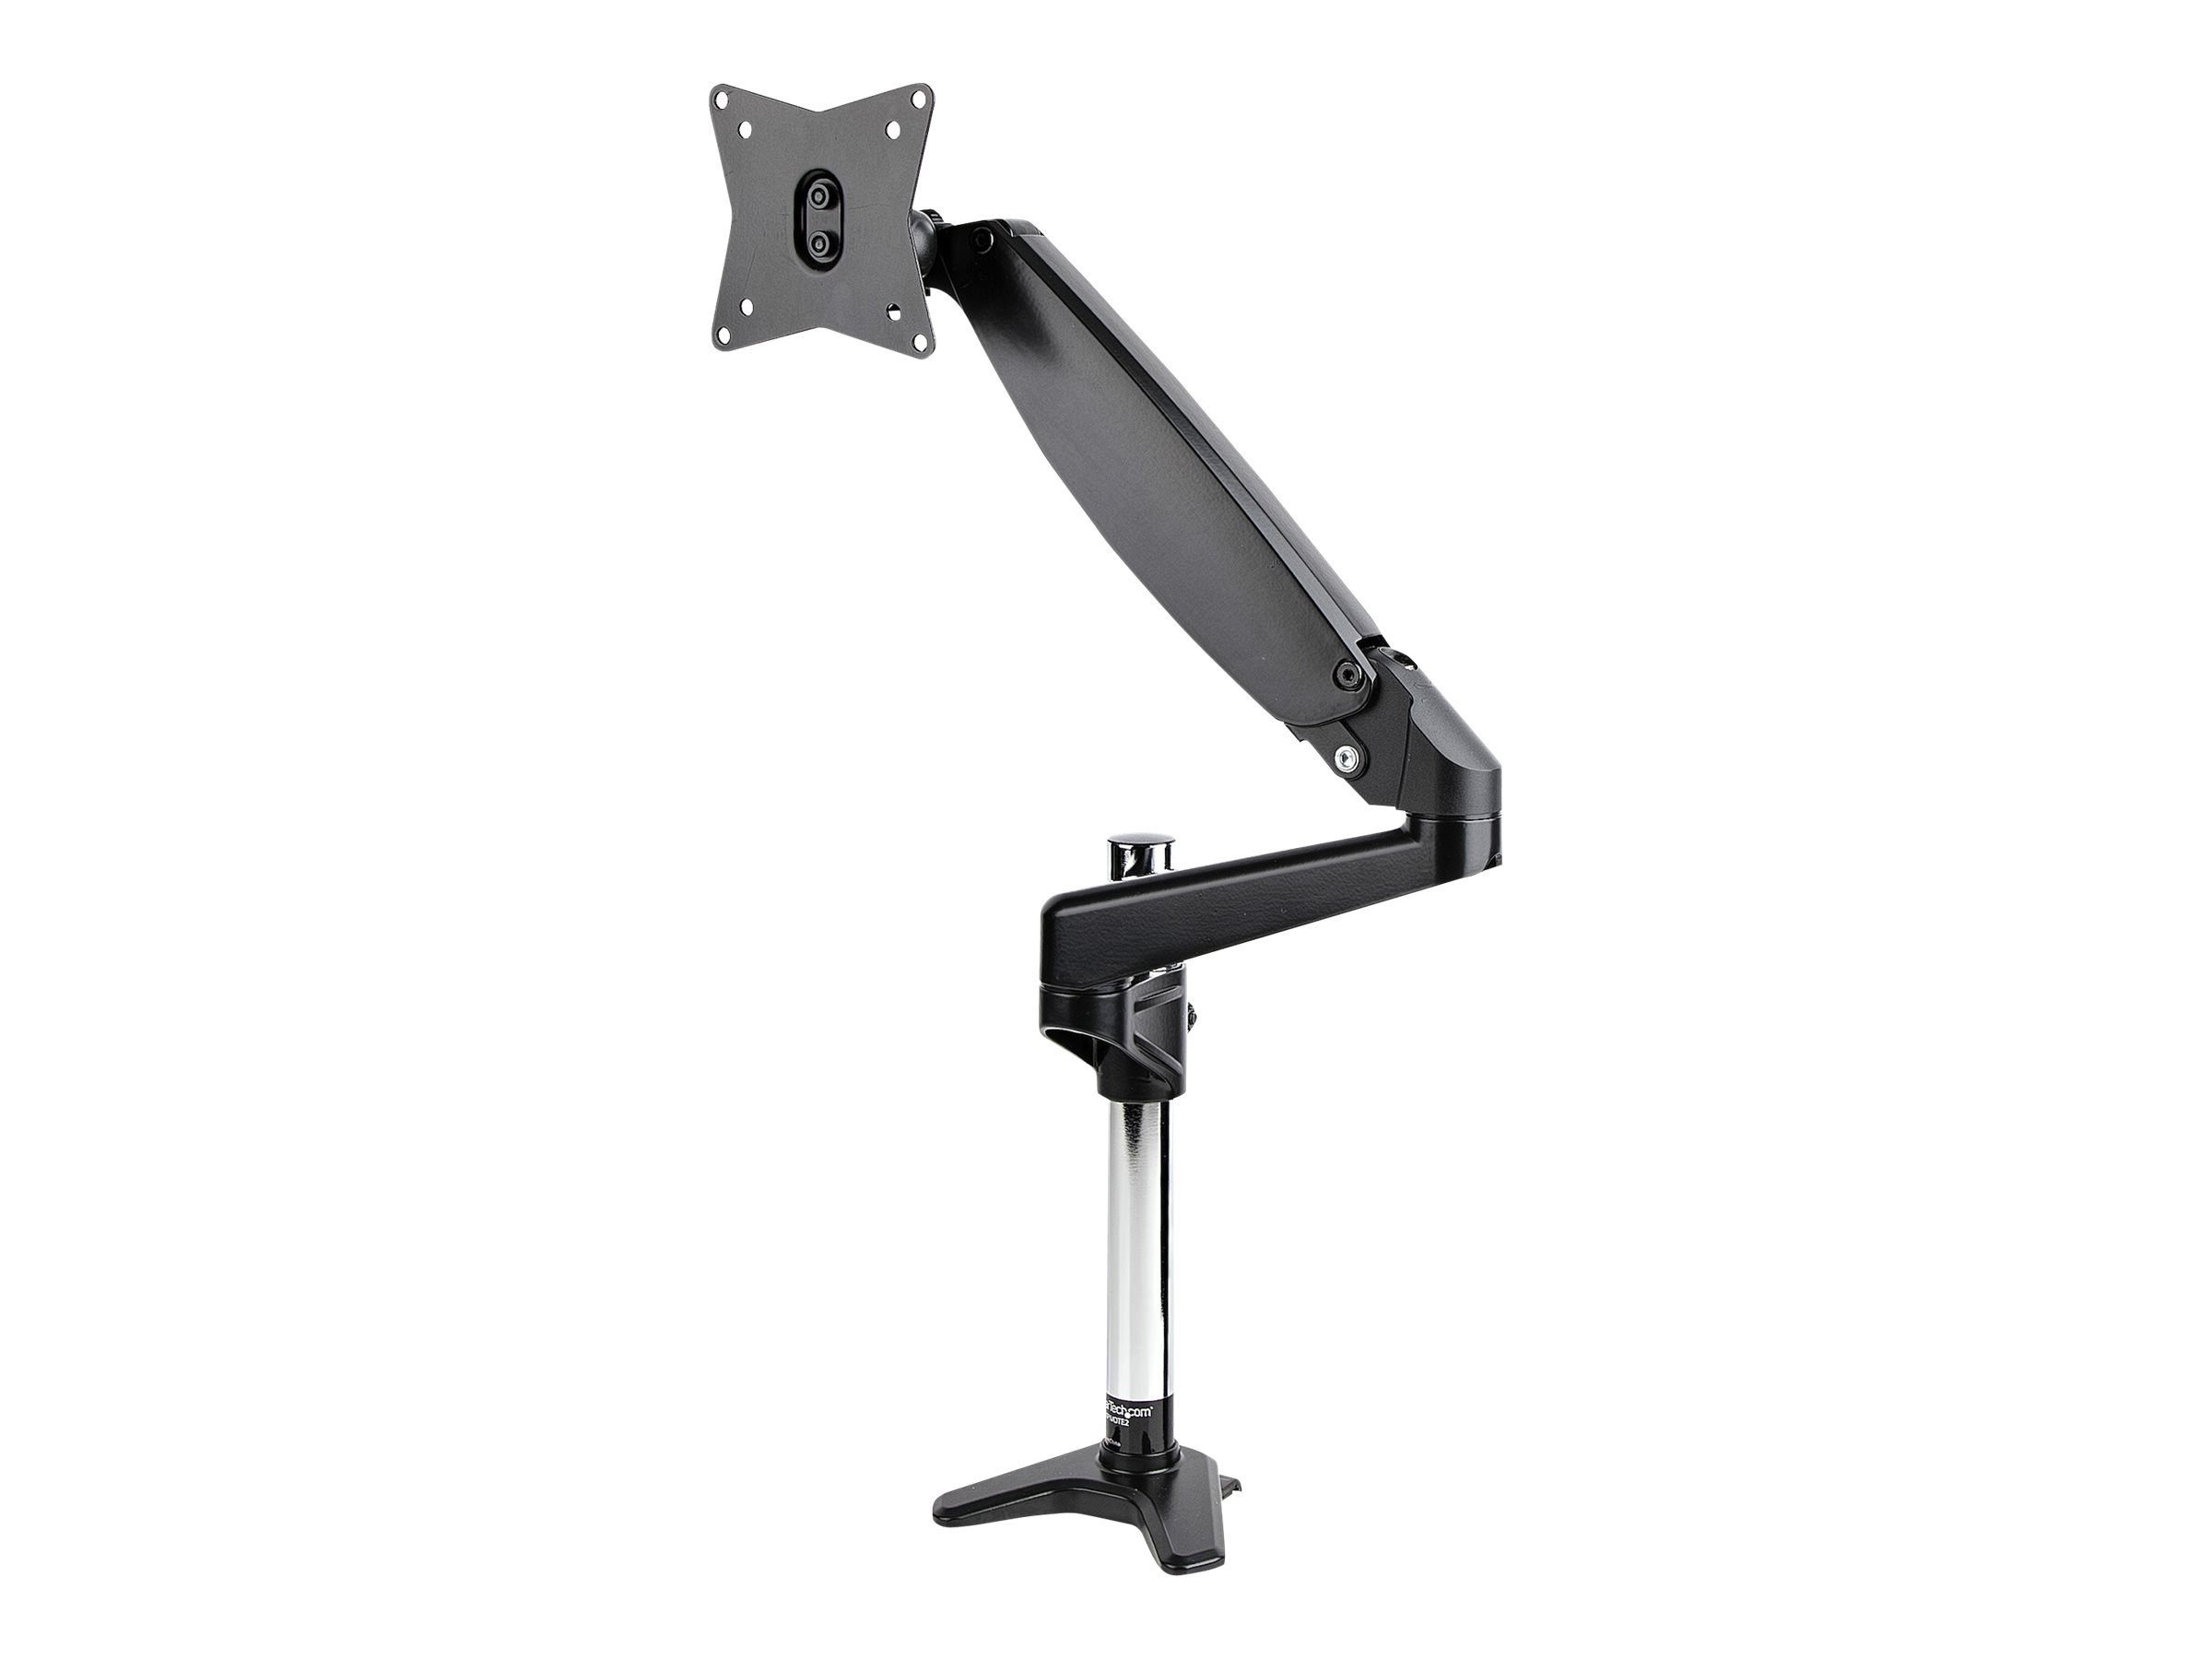 StarTech.com Desk Mount Monitor Arm for Single VESA Display up to 32" or 49" Ultrawide 8kg/17.6lb, Full Motion Articulating & Height Adjustable w/ Cable Management, C-Clamp, Grommet Mount